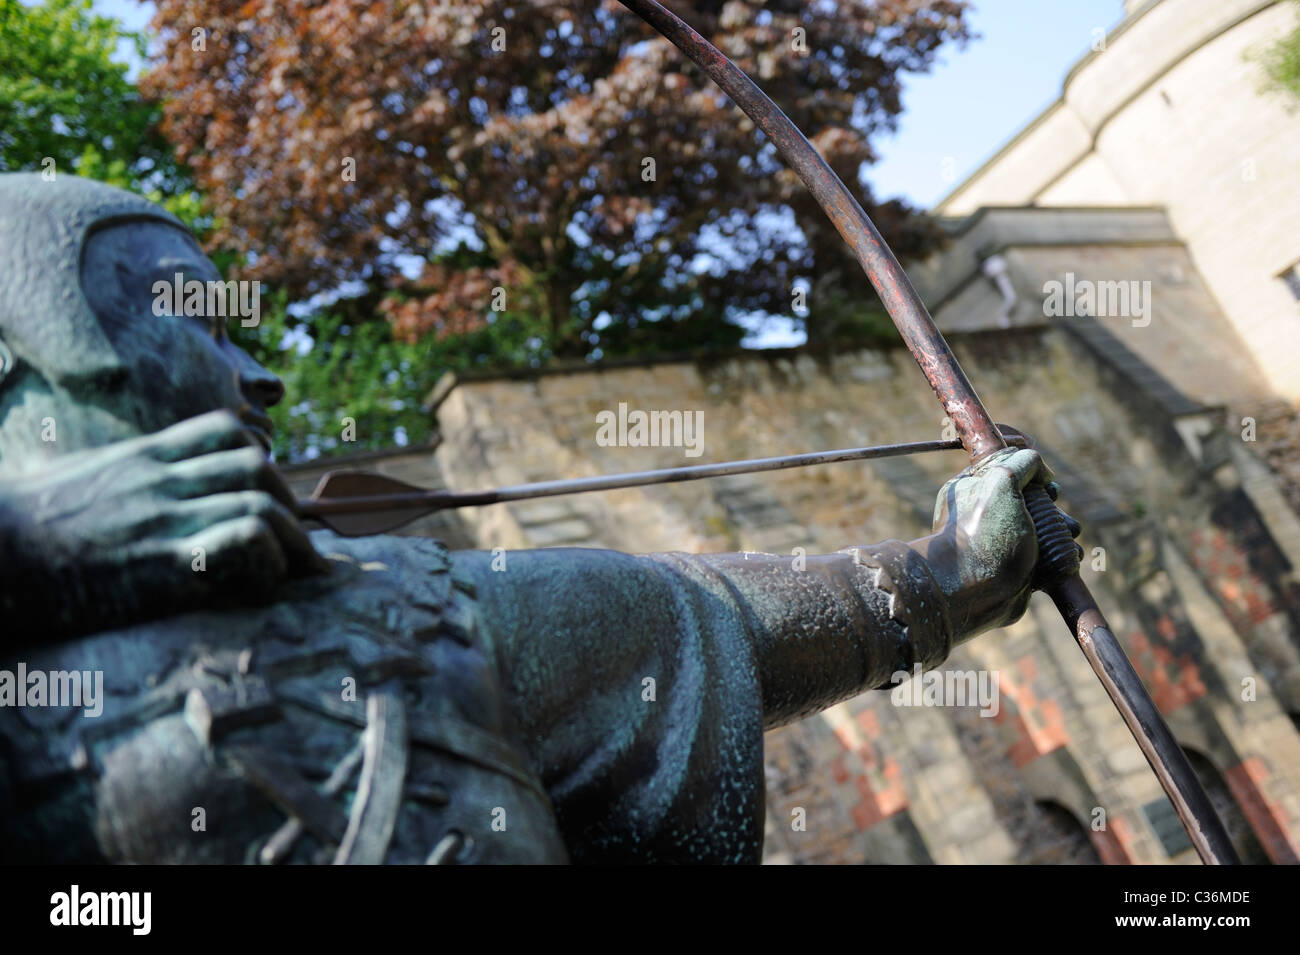 Stock Foto von Robin Hood-Statue in Nottingham. Stockfoto